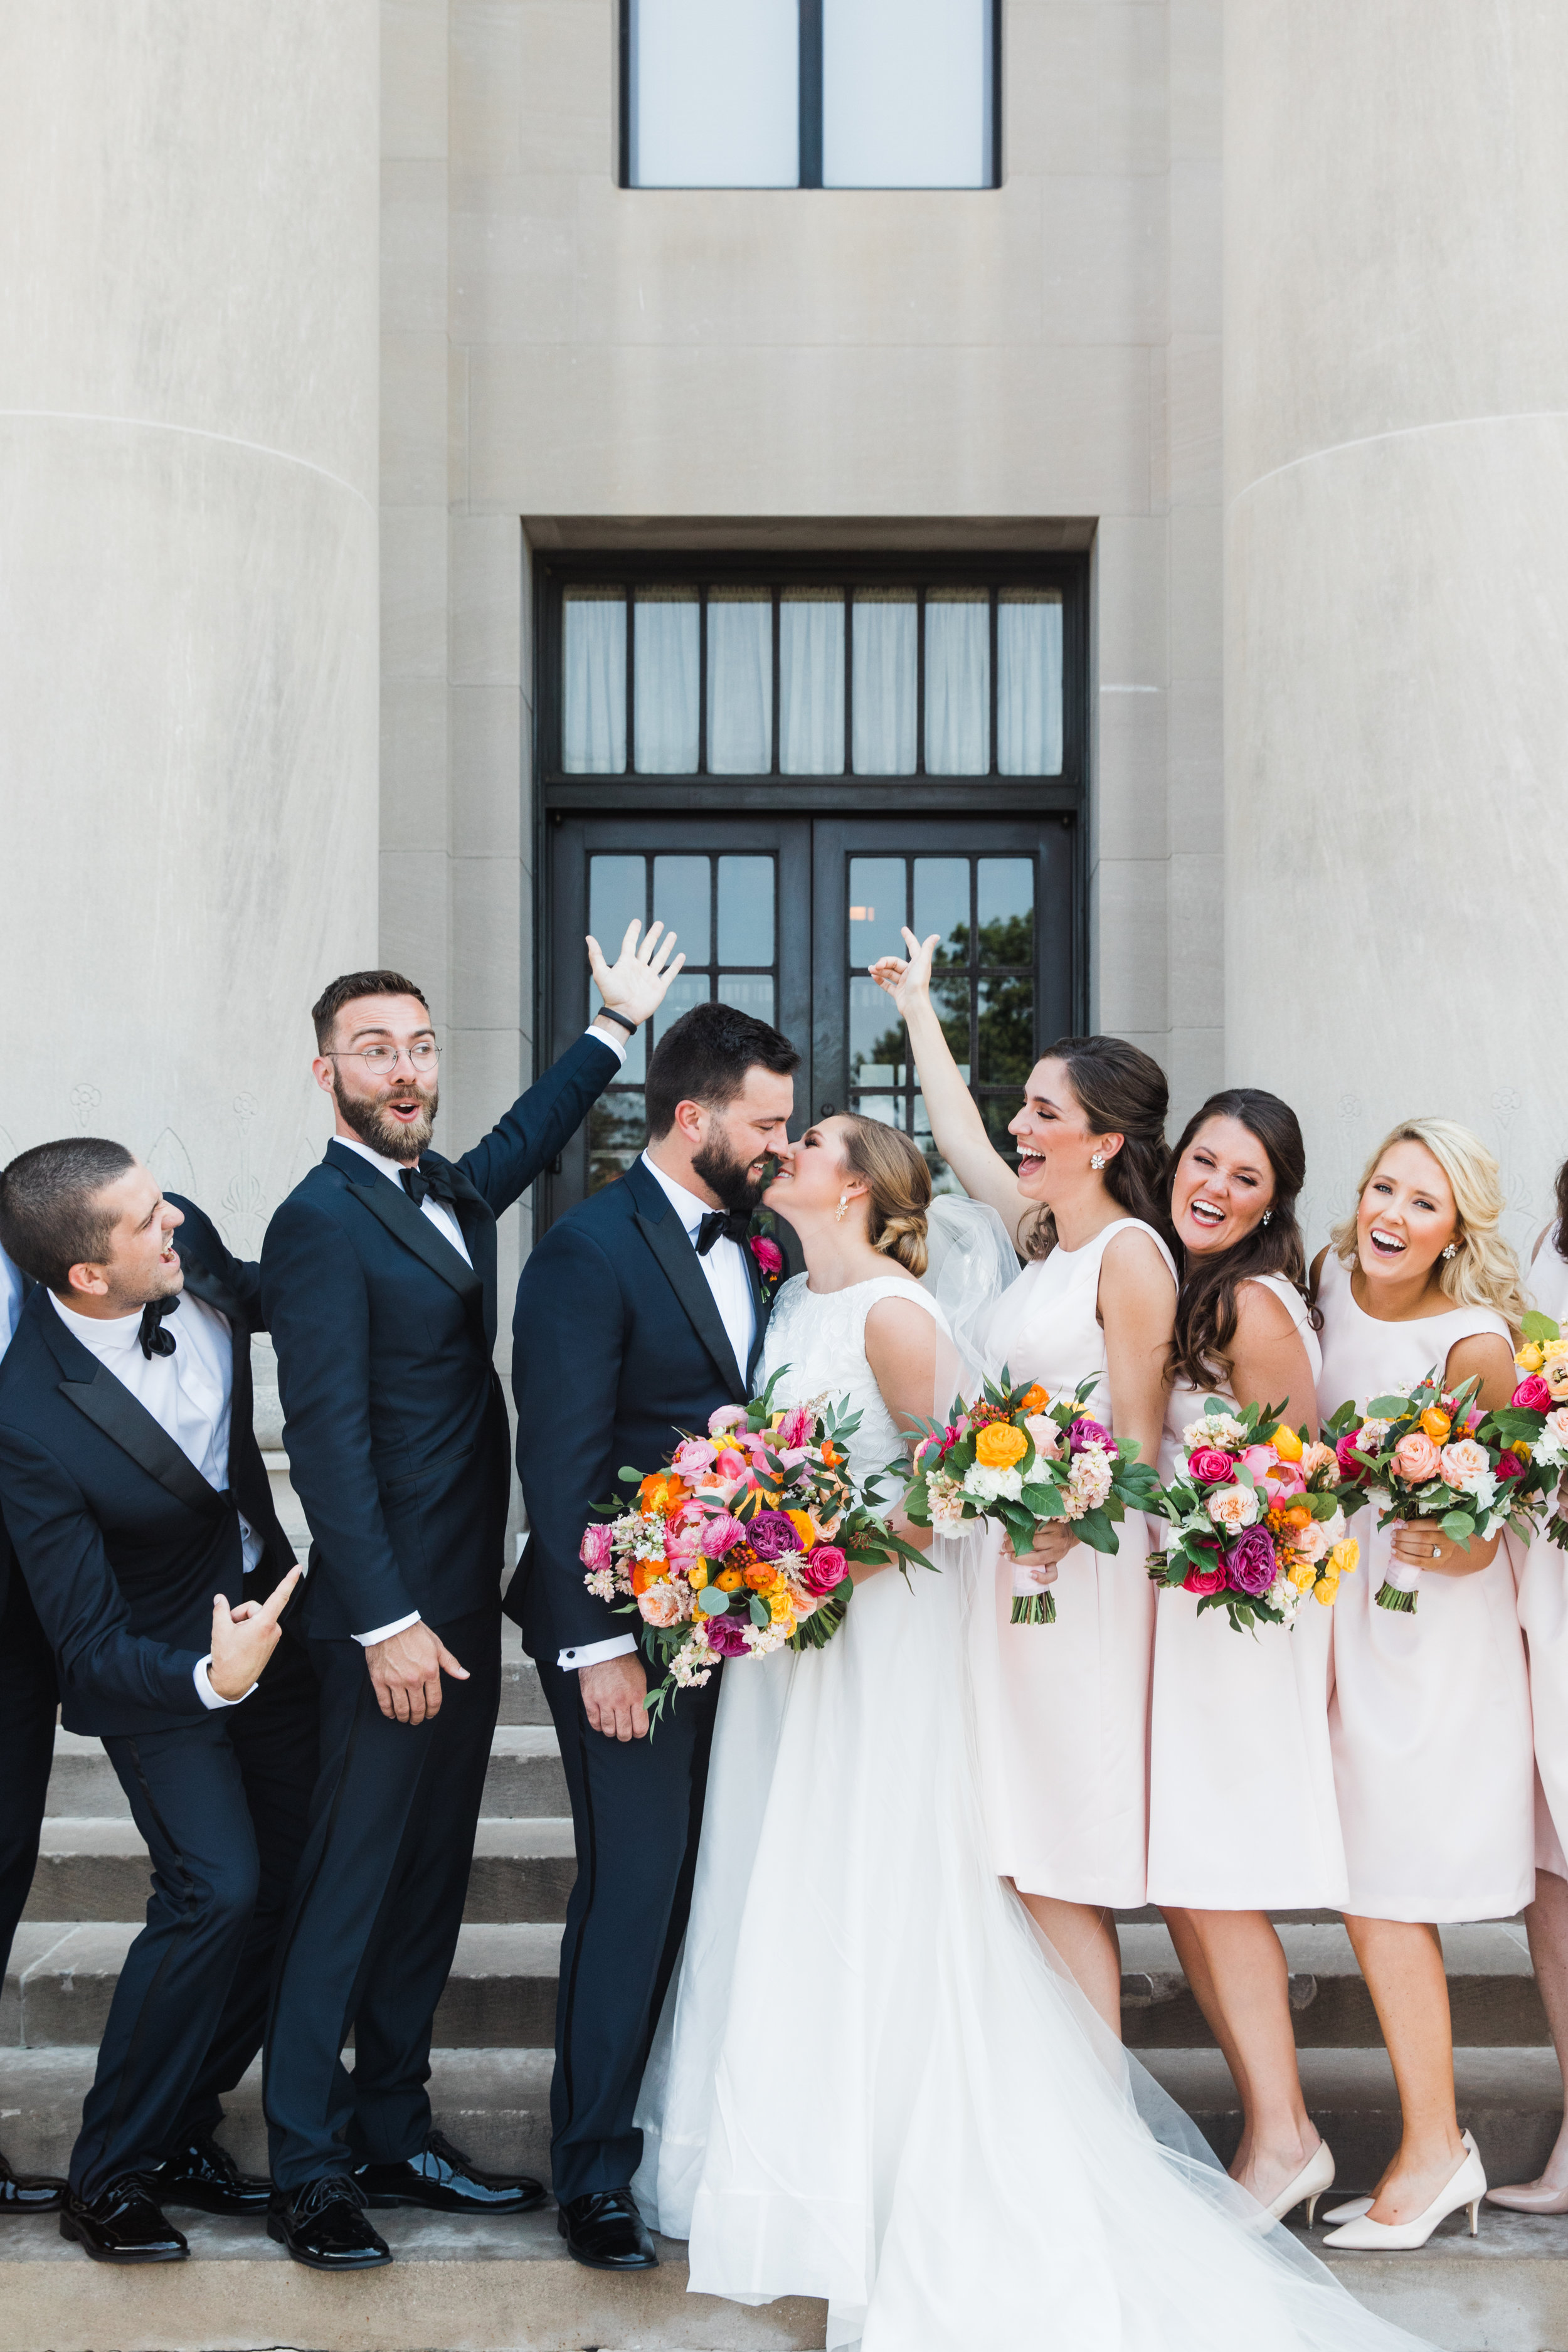 KLIMES WEDDING - MARISSA CRIBBS PHOTOGRAPHY-460.jpg